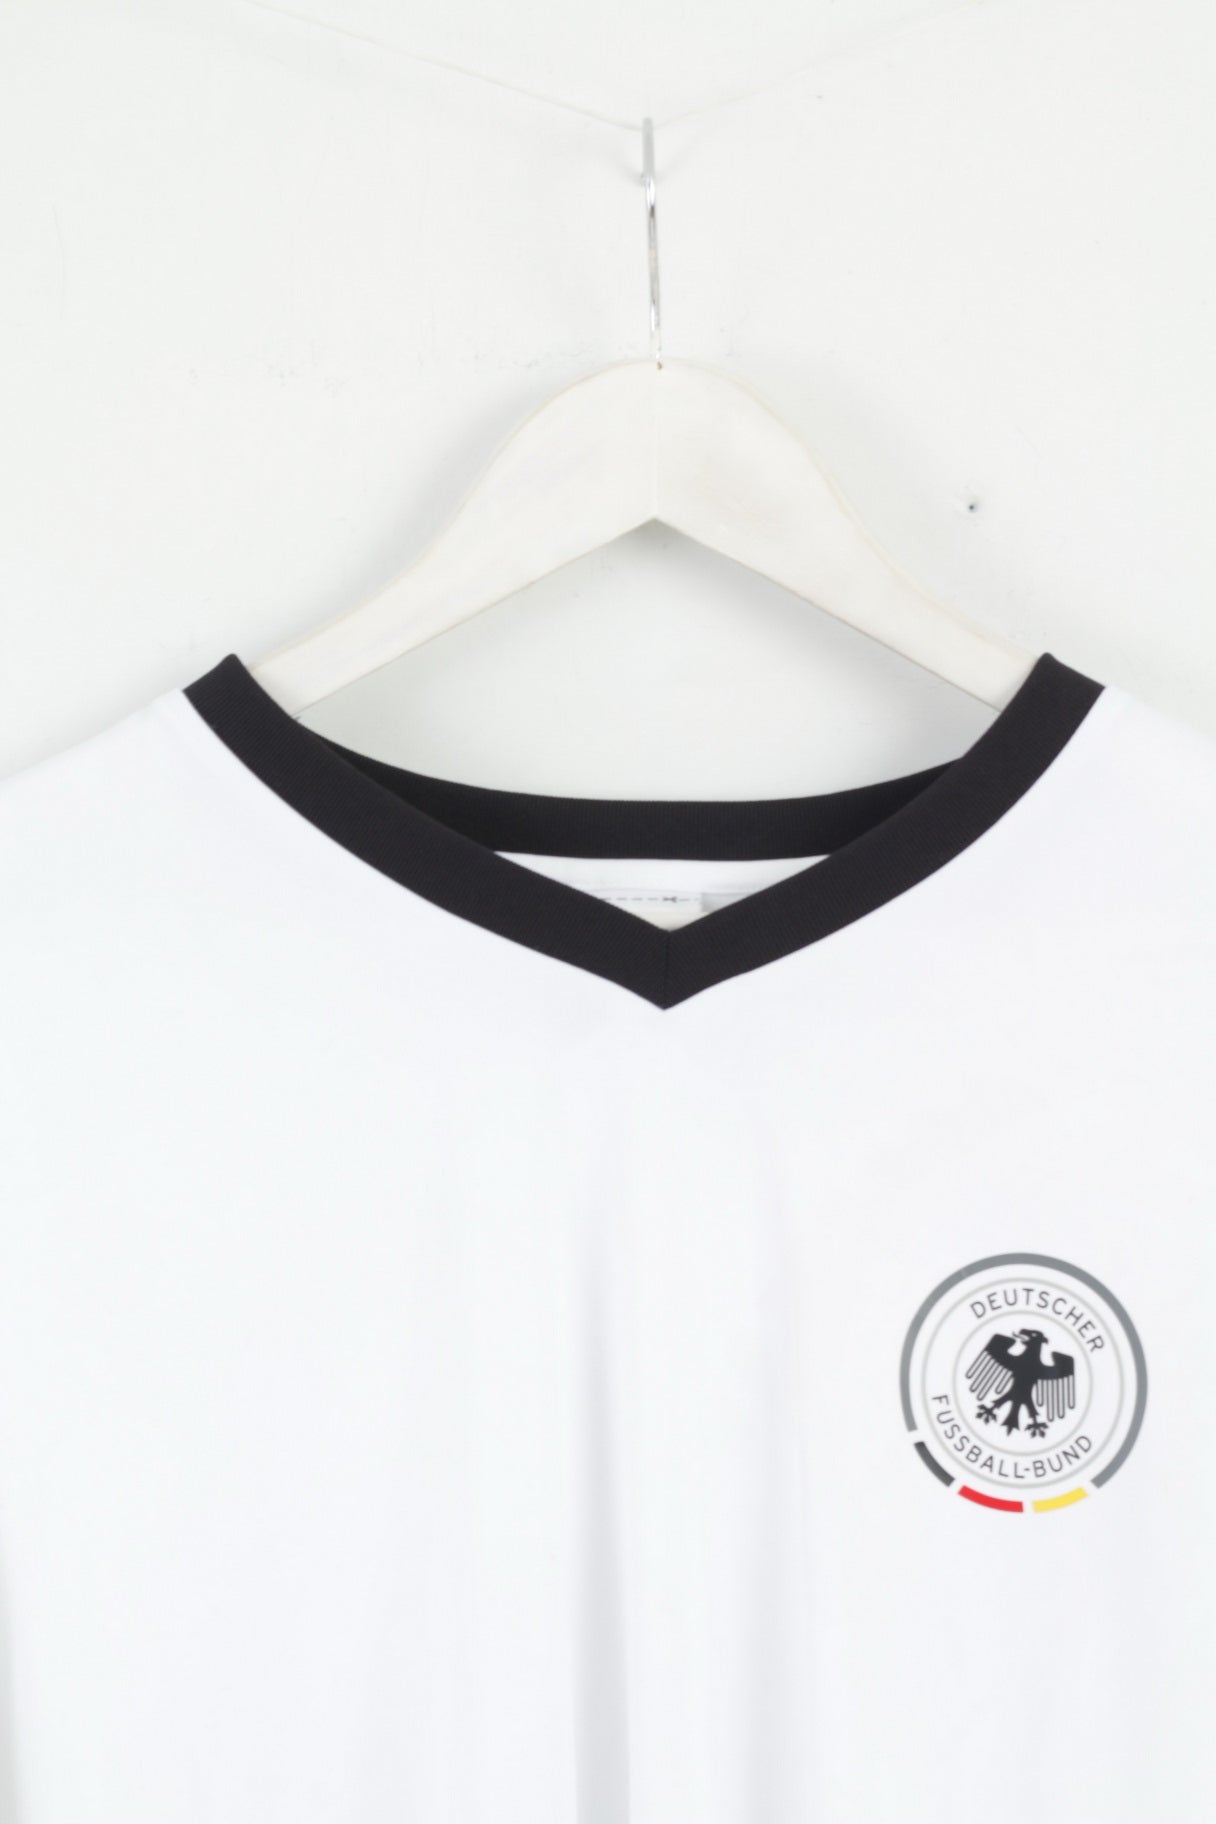 Maglia Adidas Deutscher Fussball Bund da uomo XL bianca Jogis Joker 14 pelliccia Maglia da calcio Rio